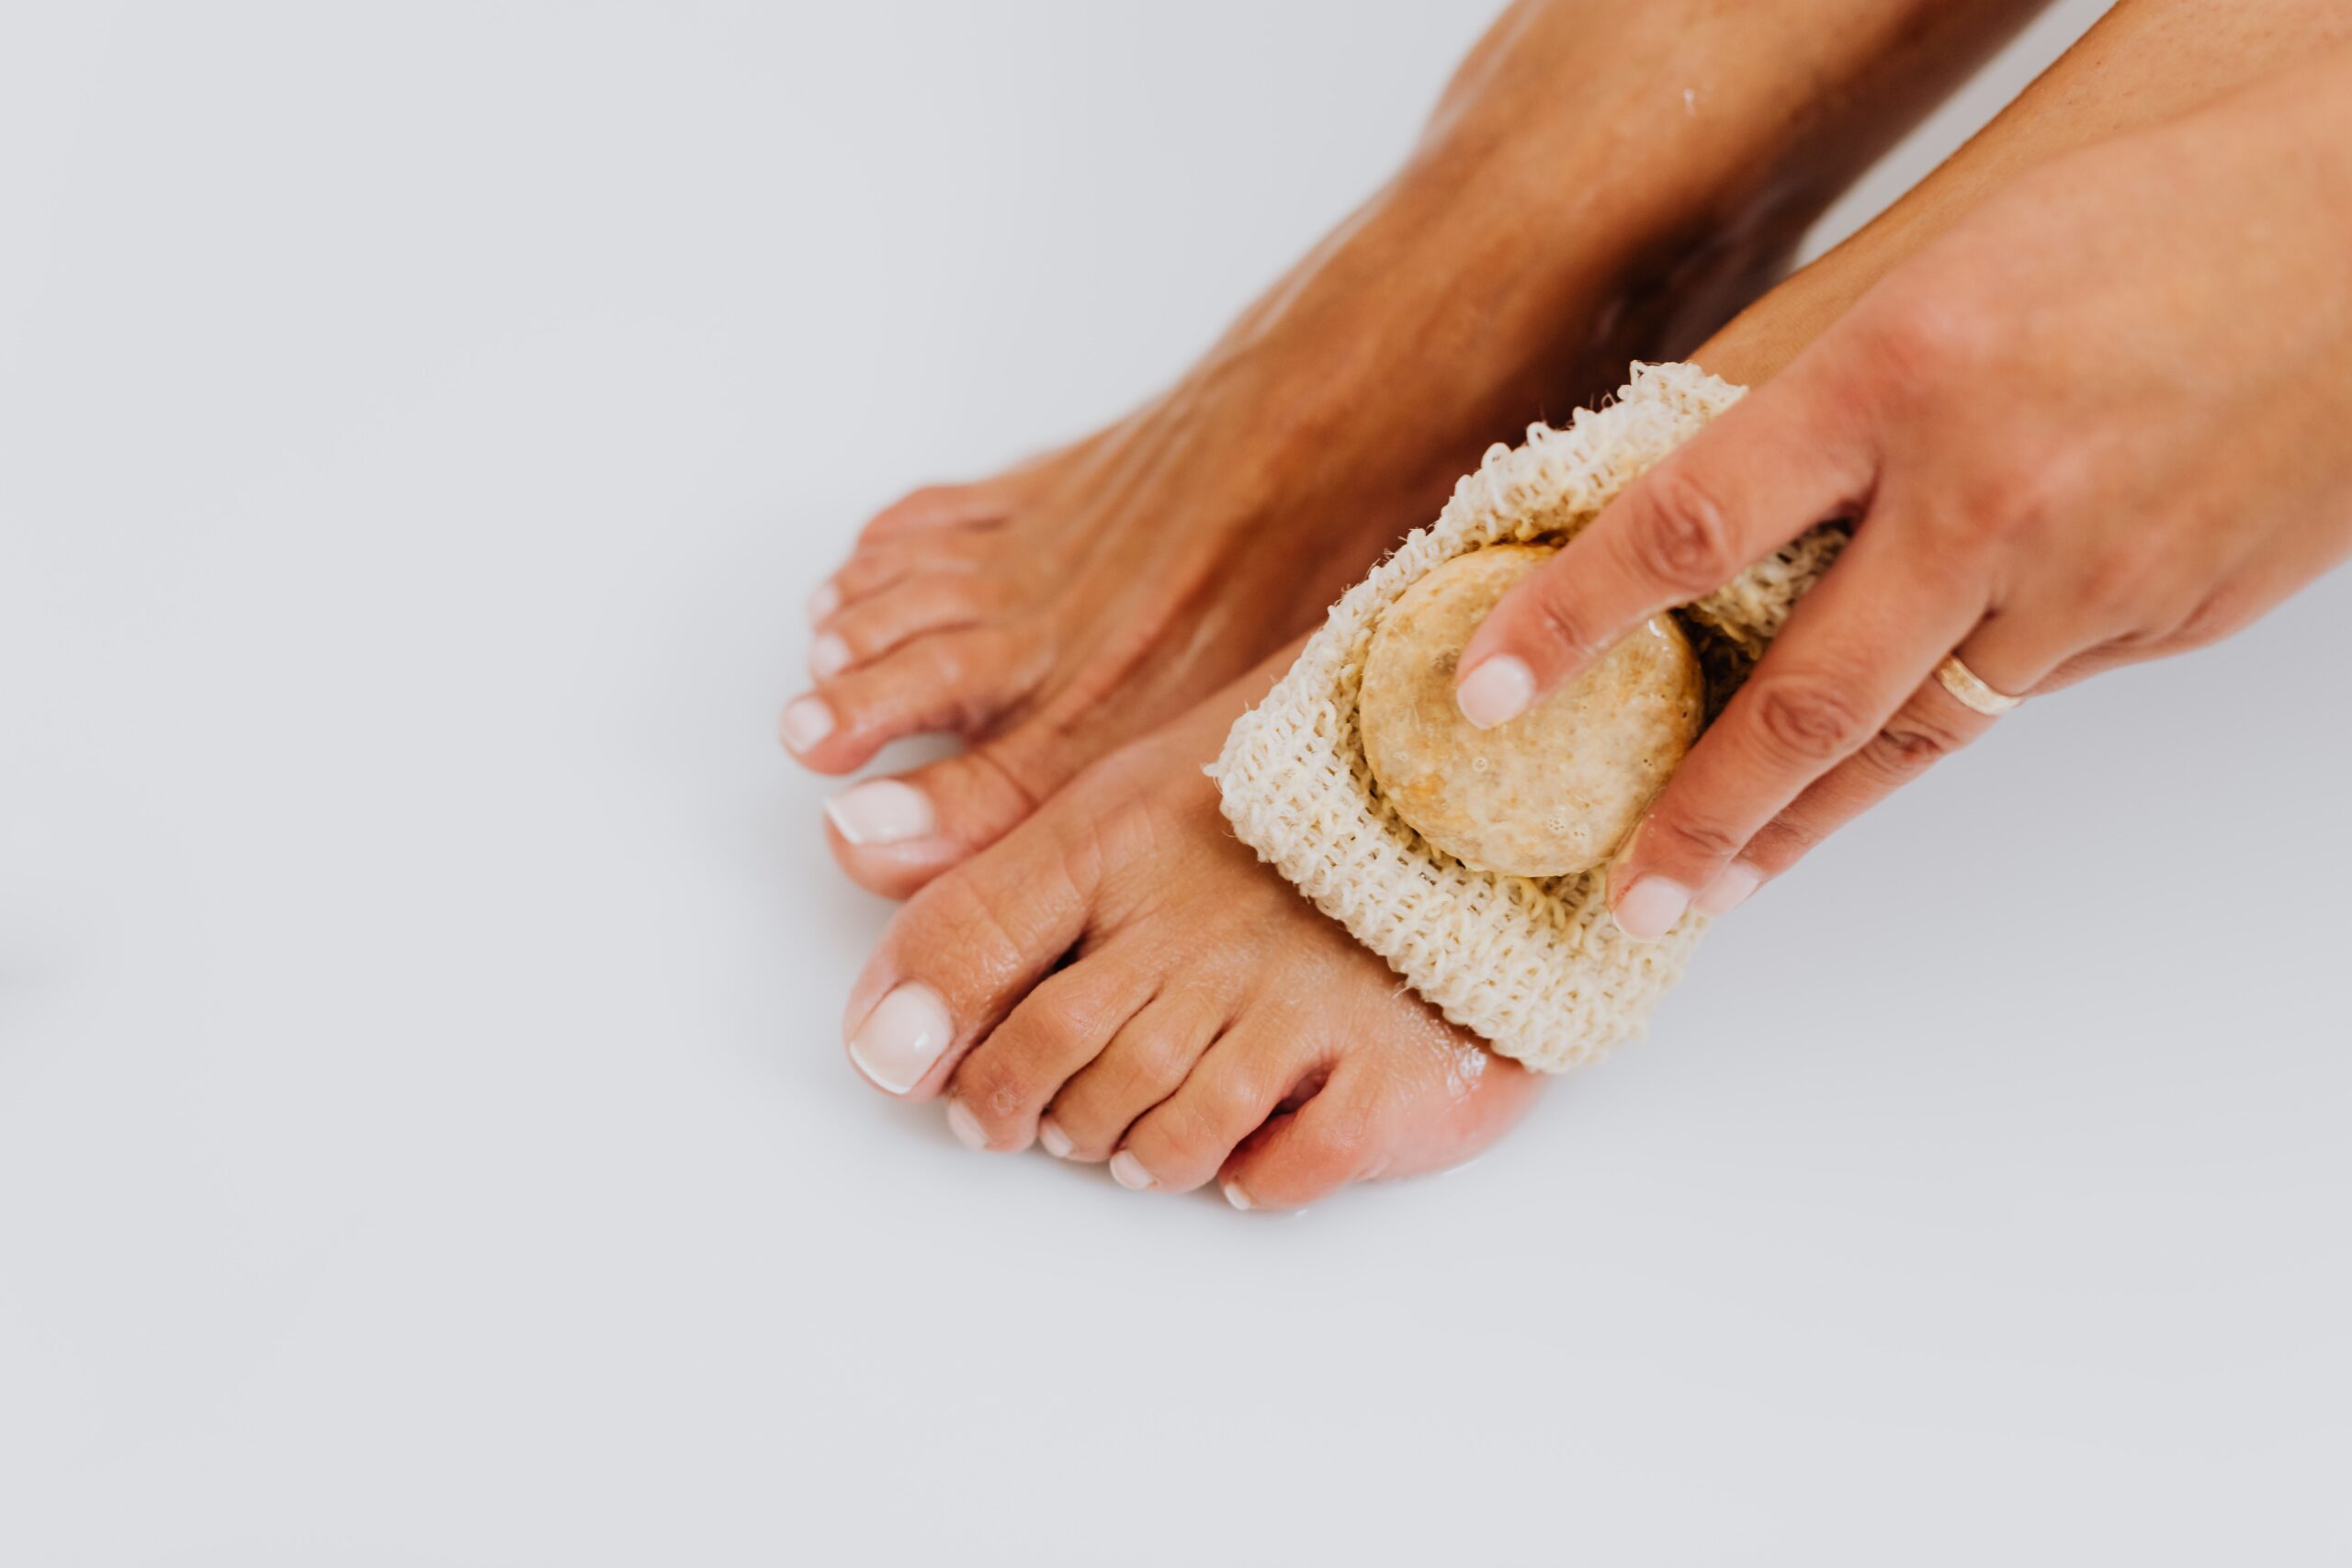 Home Essentials Manicure Pedicure Foot Scrubber Foot File Callus